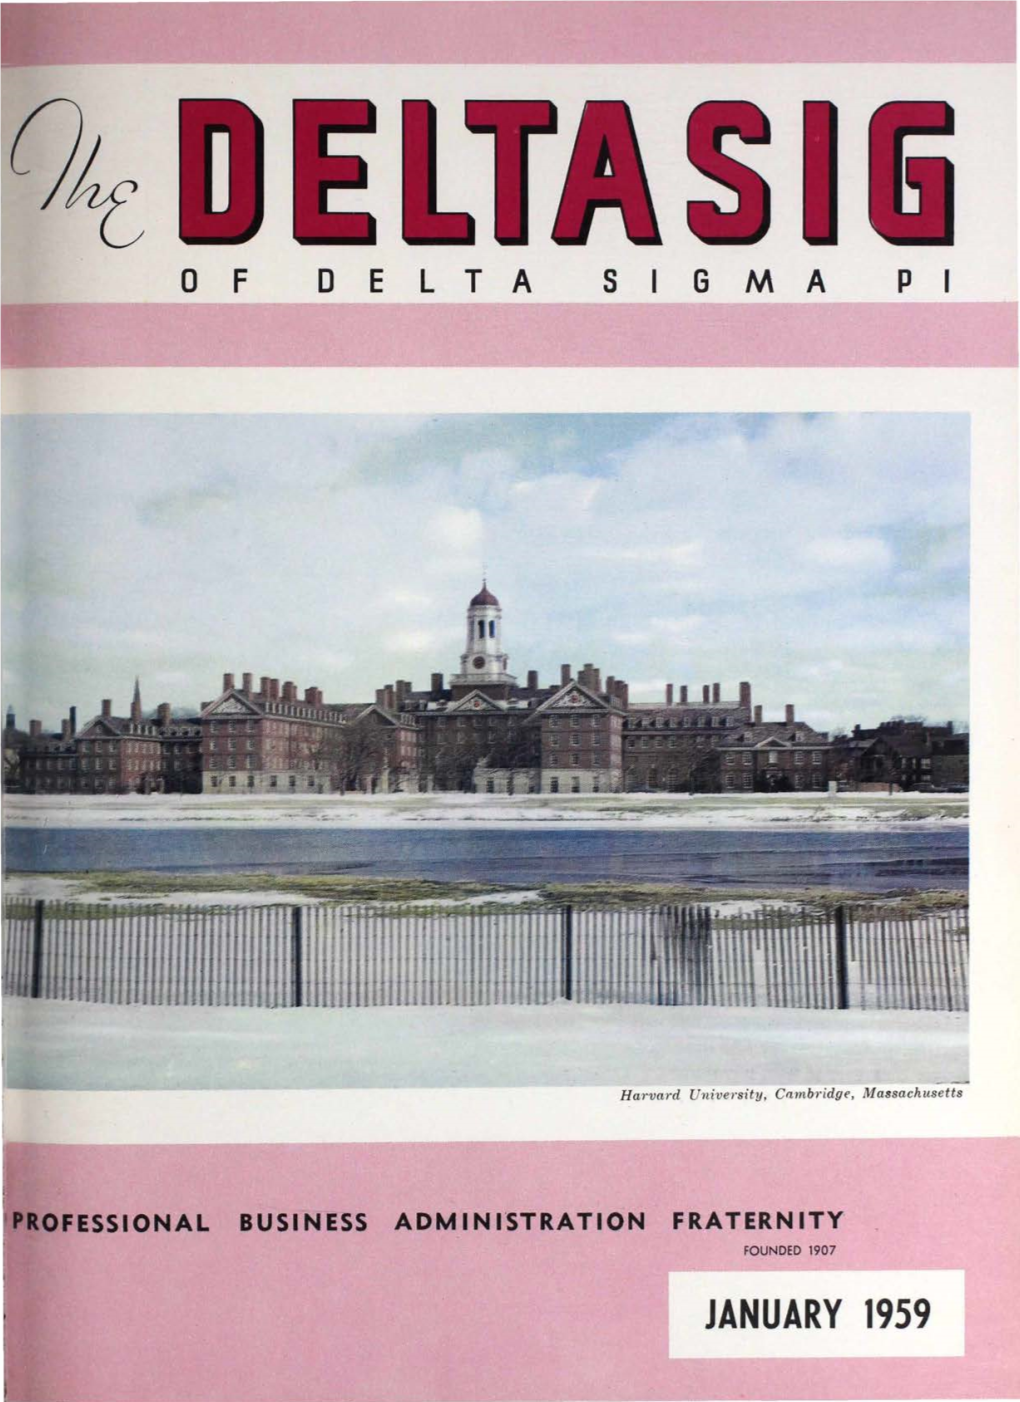 JANUARY 1959 the International Fraternity of Delta Sigma Pi